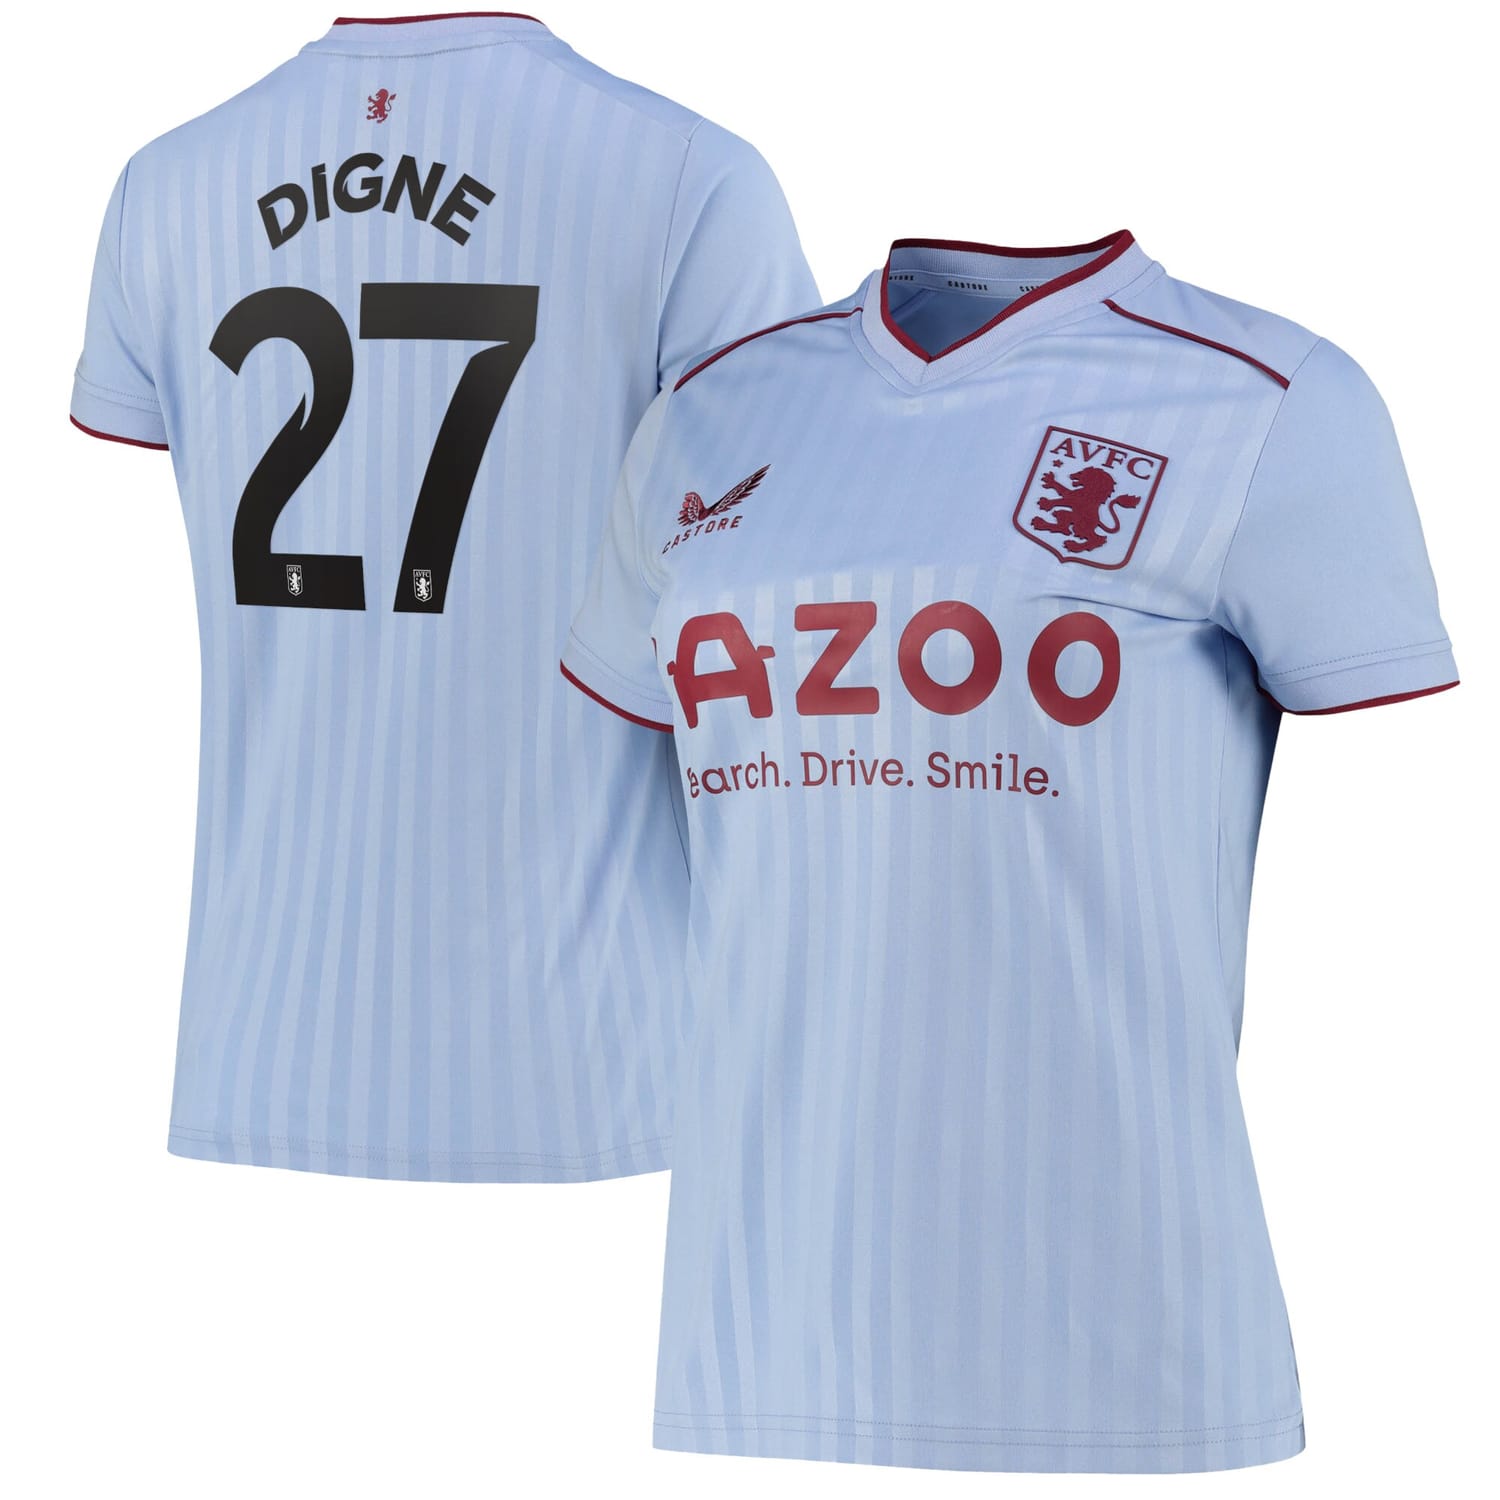 Premier League Aston Villa Away Cup Jersey Shirt 2022-23 player Lucas Digne 27 printing for Women